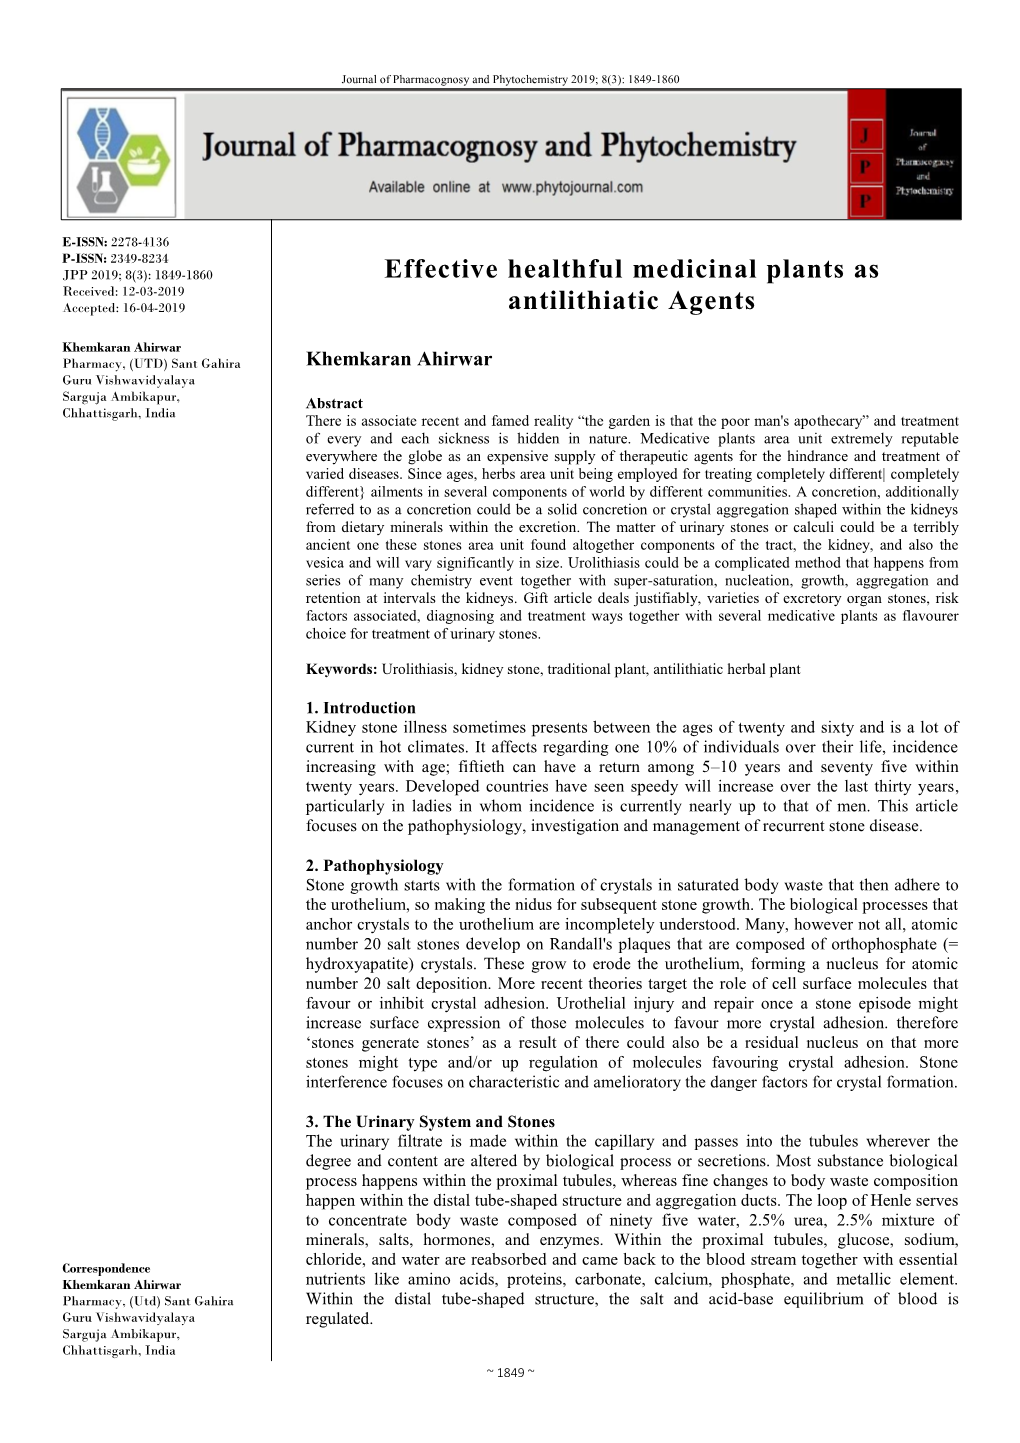 Effective Healthful Medicinal Plants As Antilithiatic Agents